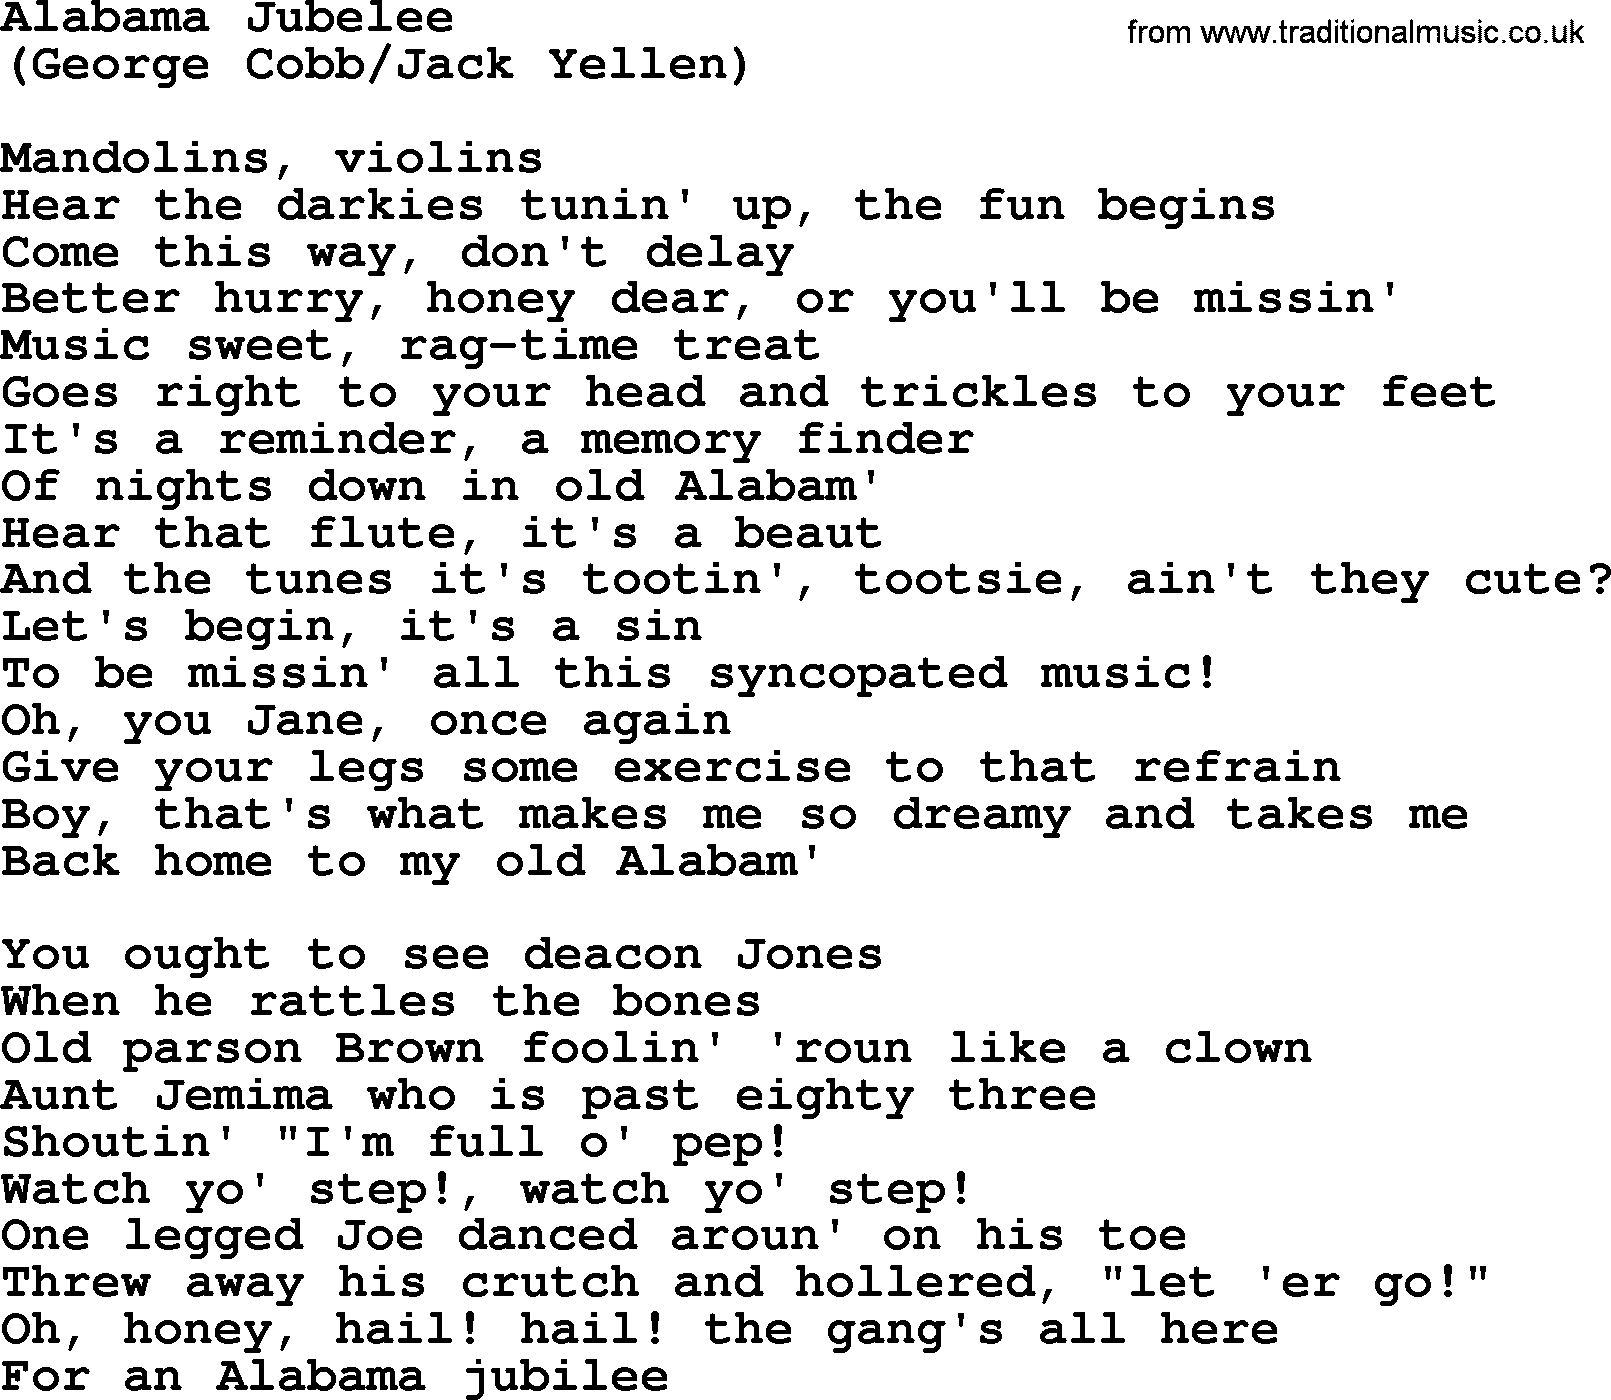 The Byrds song Alabama Jubelee, lyrics